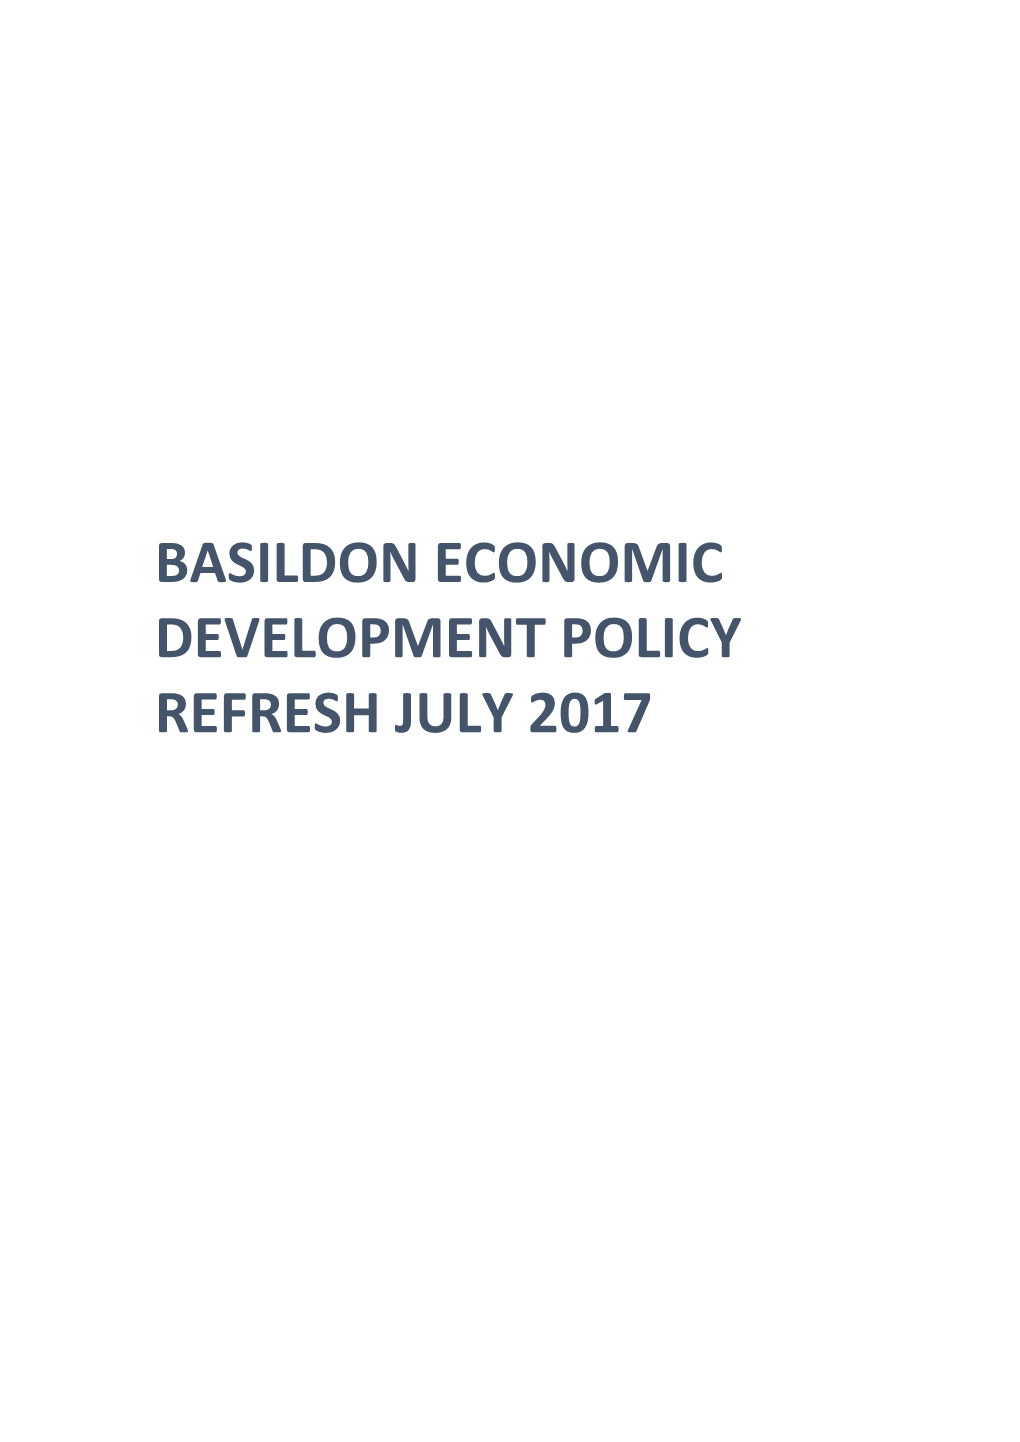 Basildon Economic Development Policy Refresh July 2017